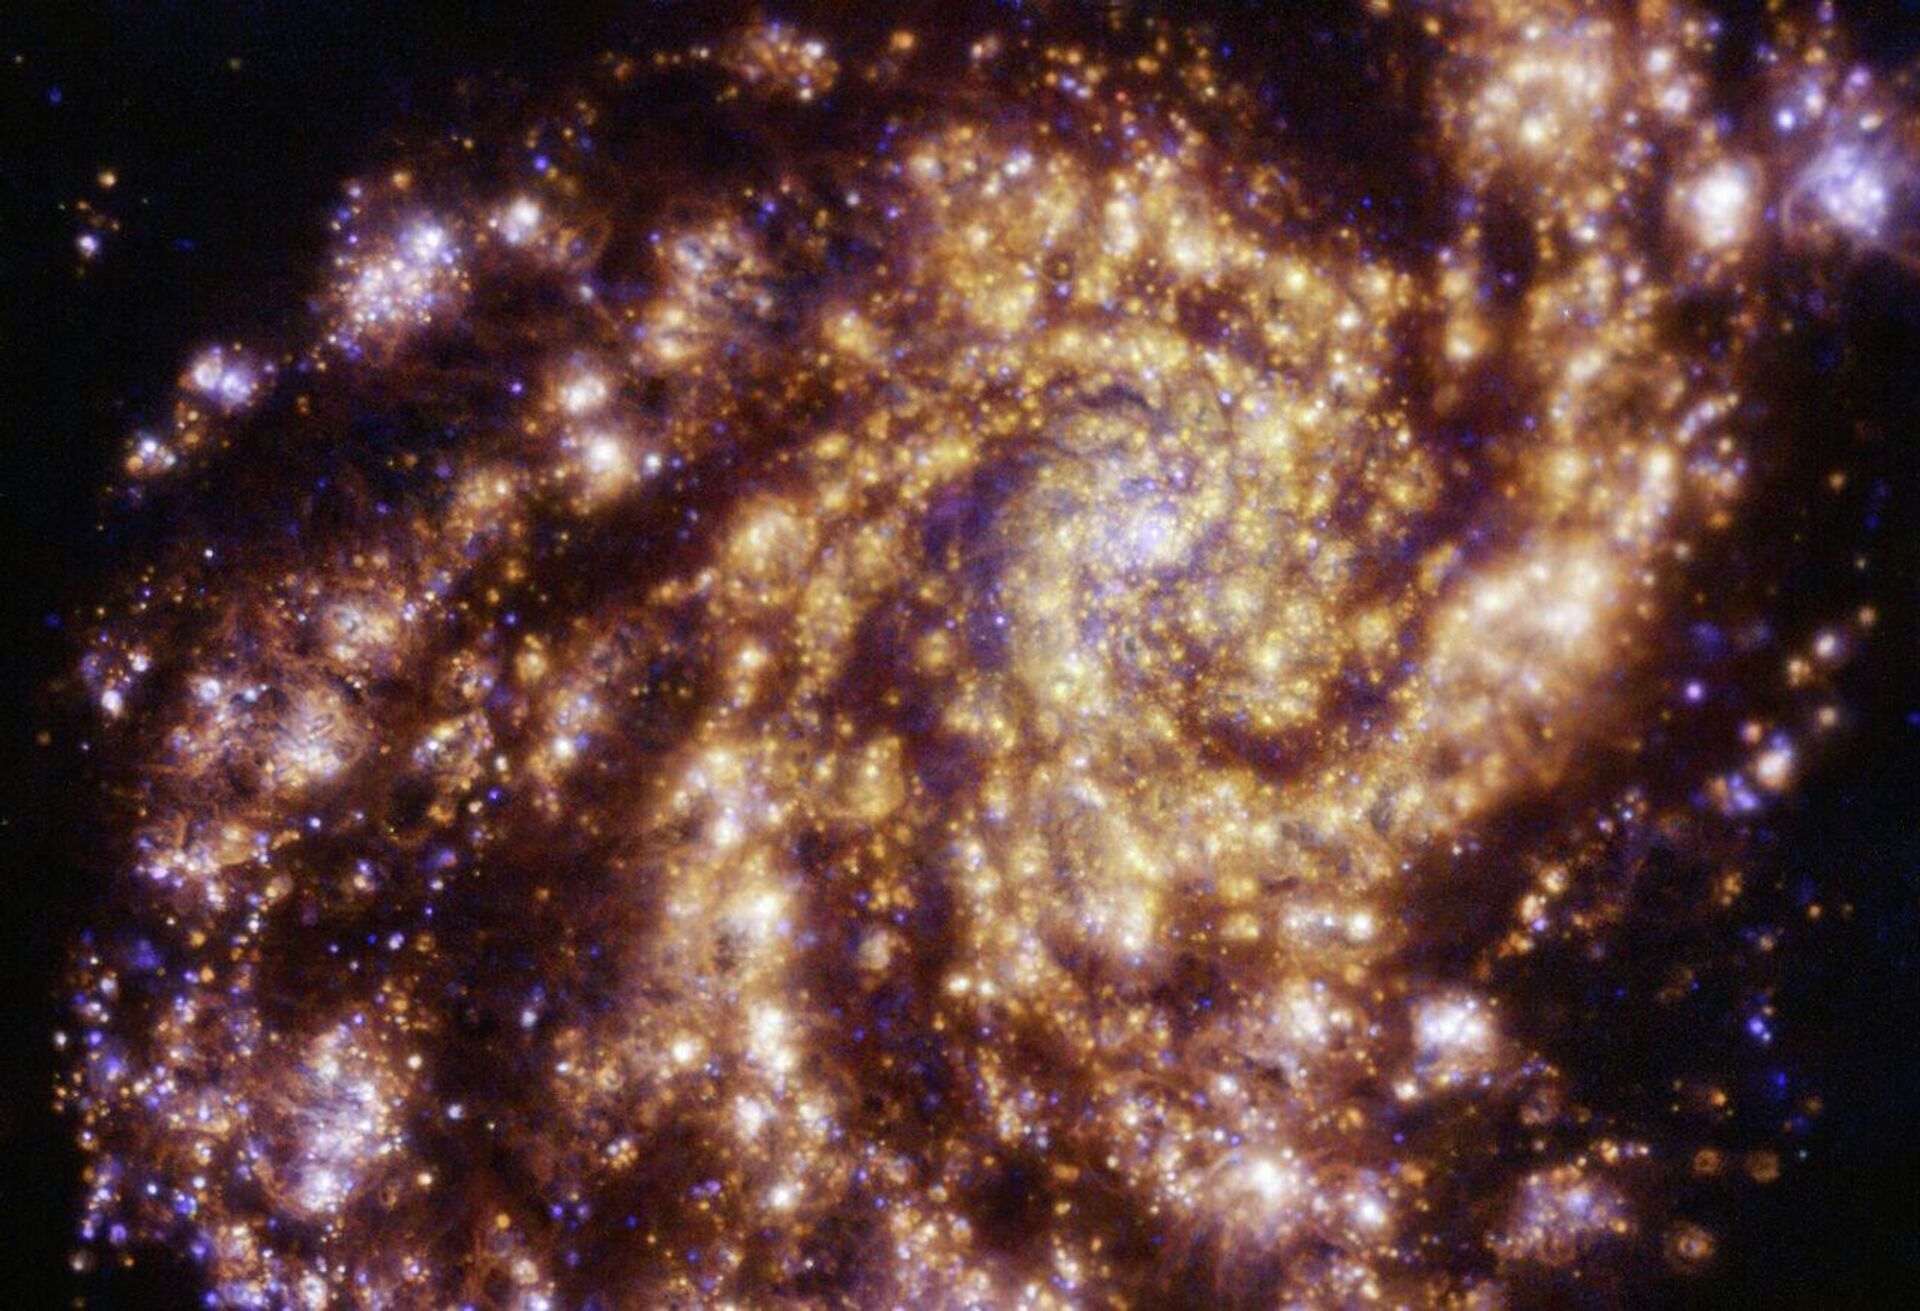 La galaxia espiral NGC 4254 iluminada por estrellas - Sputnik Mundo, 1920, 18.03.2022